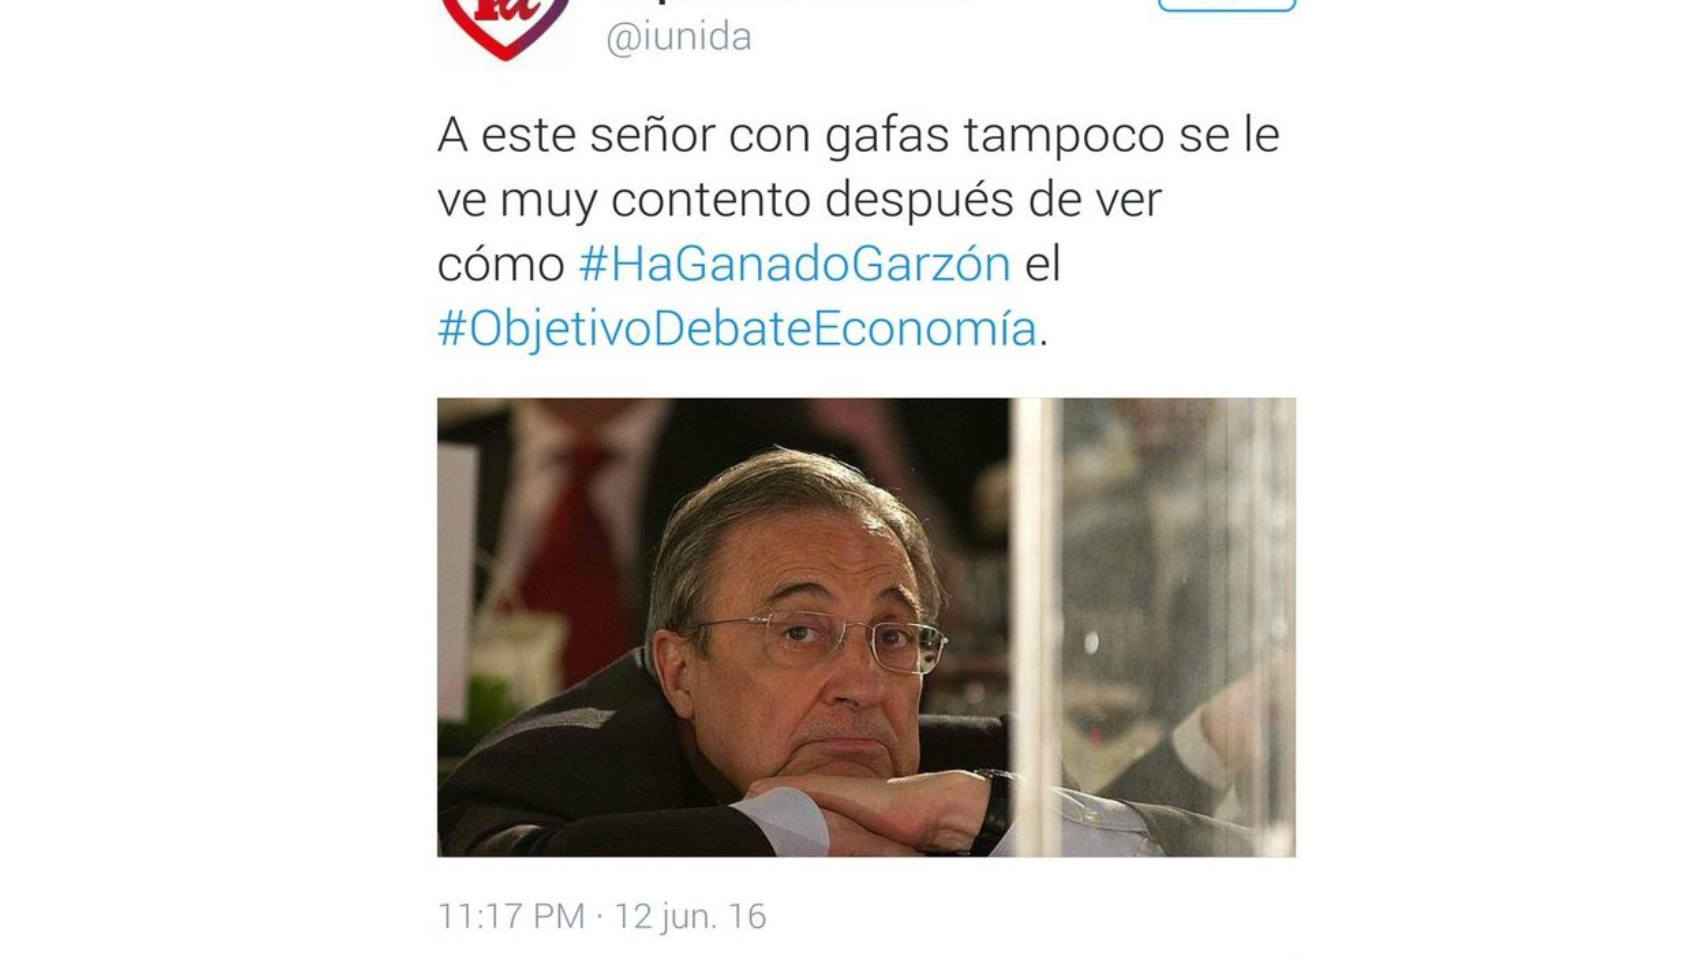 El tuit original con la imagen de Florentino Pérez.